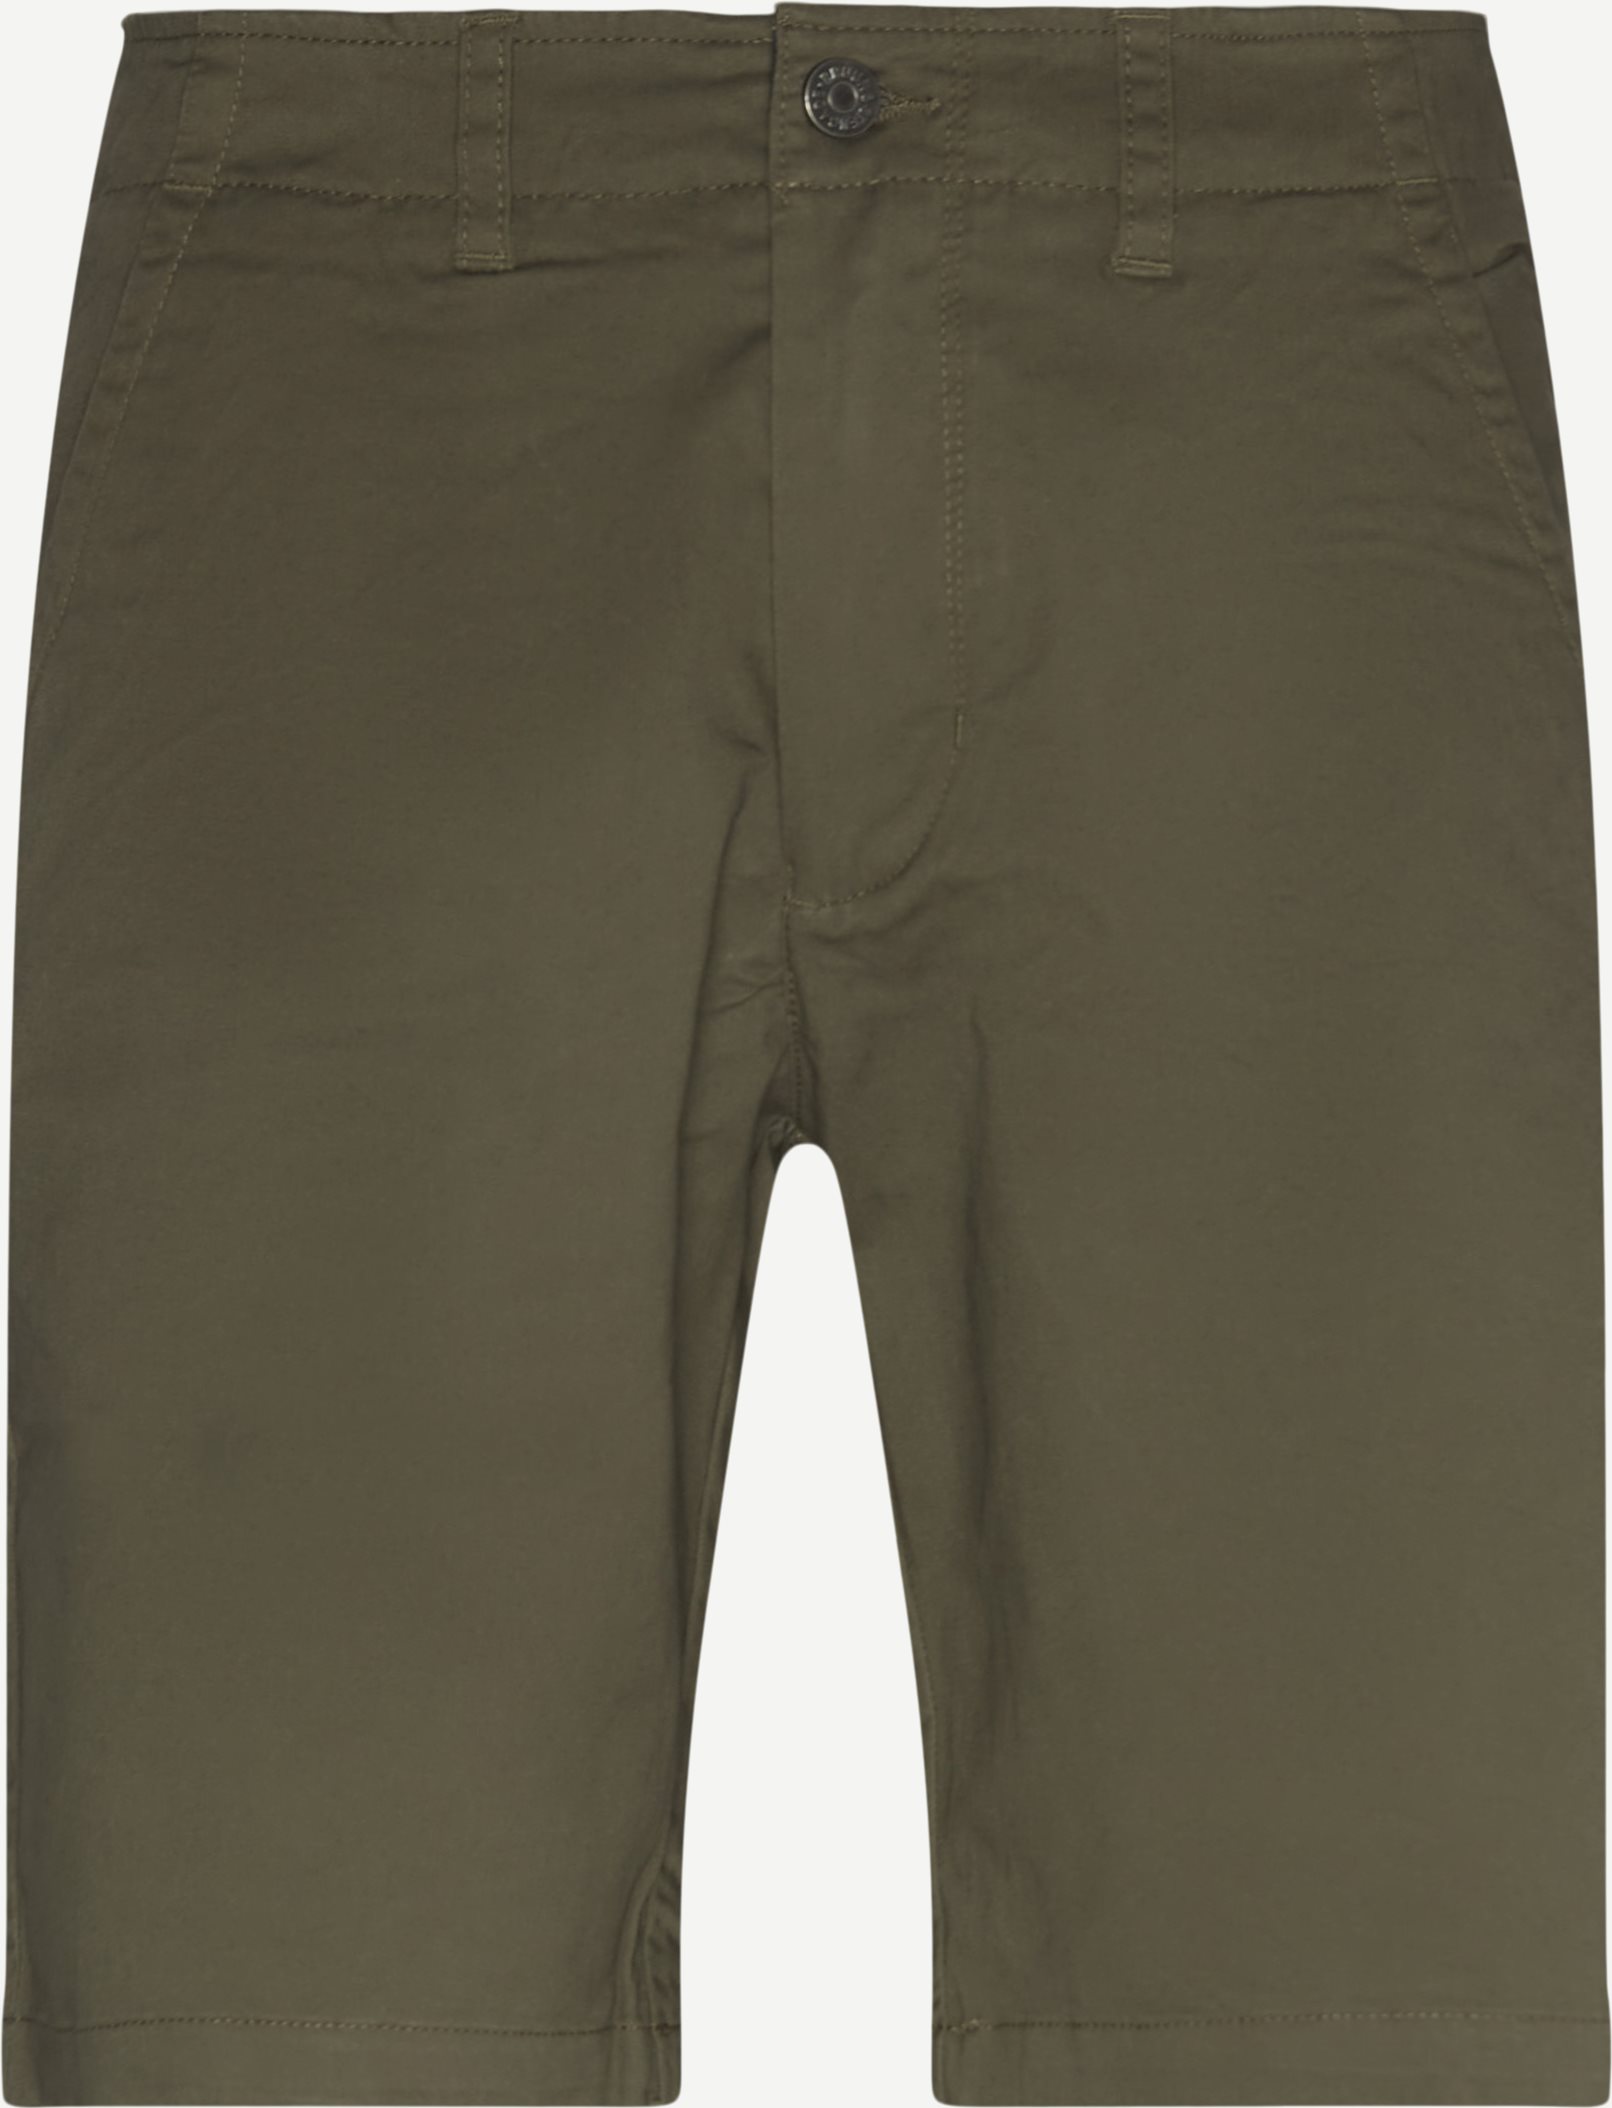 Scherbatsky Shorts - Shorts - Regular fit - Army